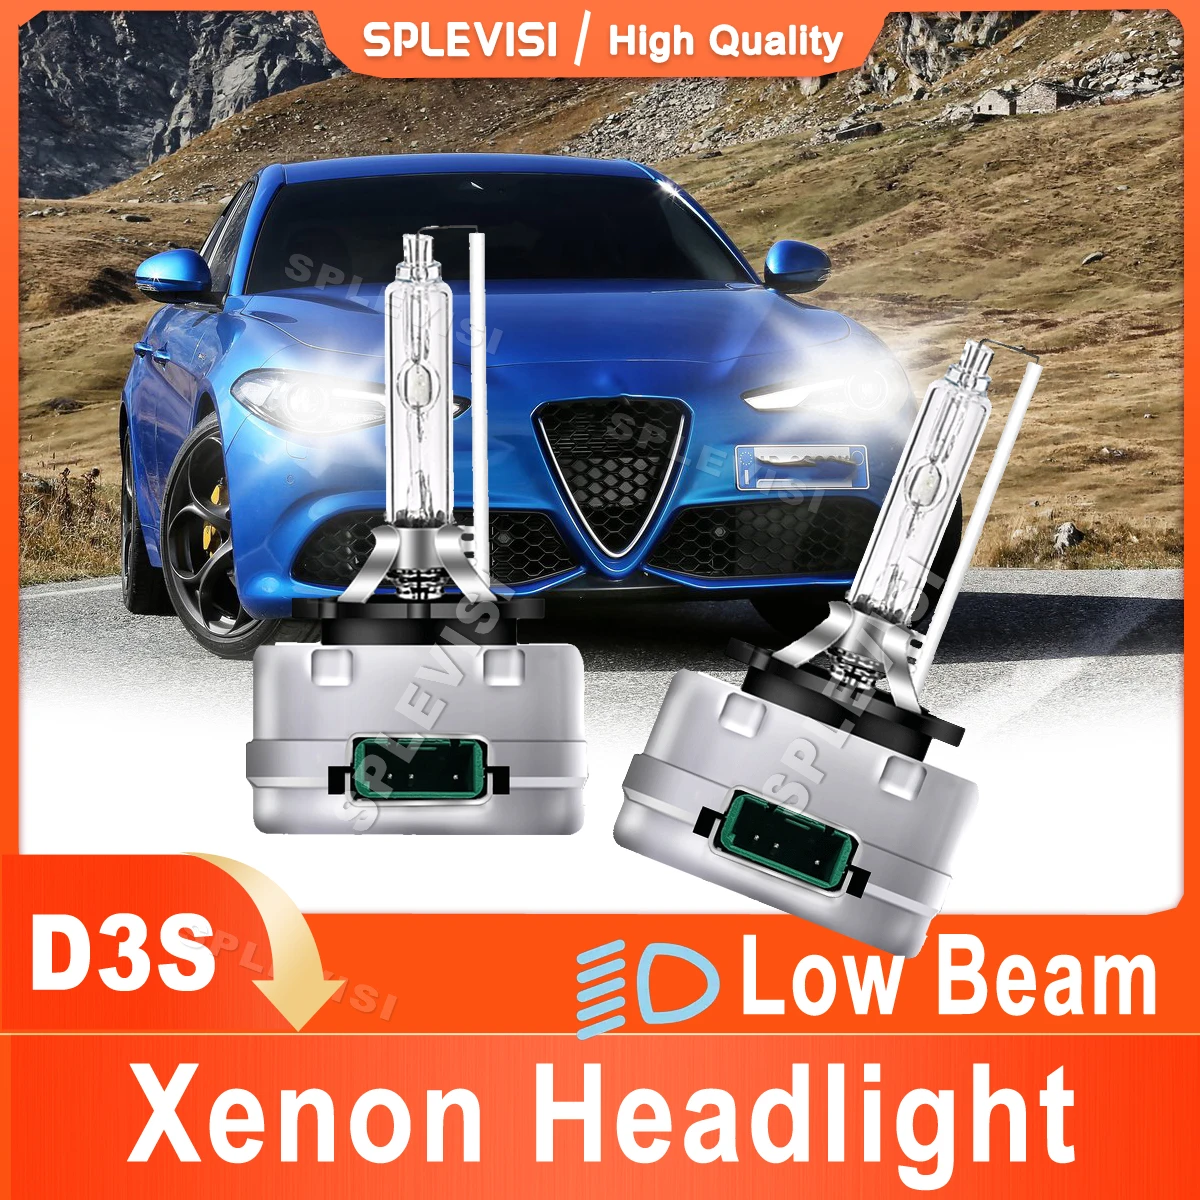 

SPLEVISI Car Headlight Low Beam D3S Xenon Lamp 9000LM Replace For Alfa Romeo Giulia 2015 2016 2017 2018 2019 2020 HID White